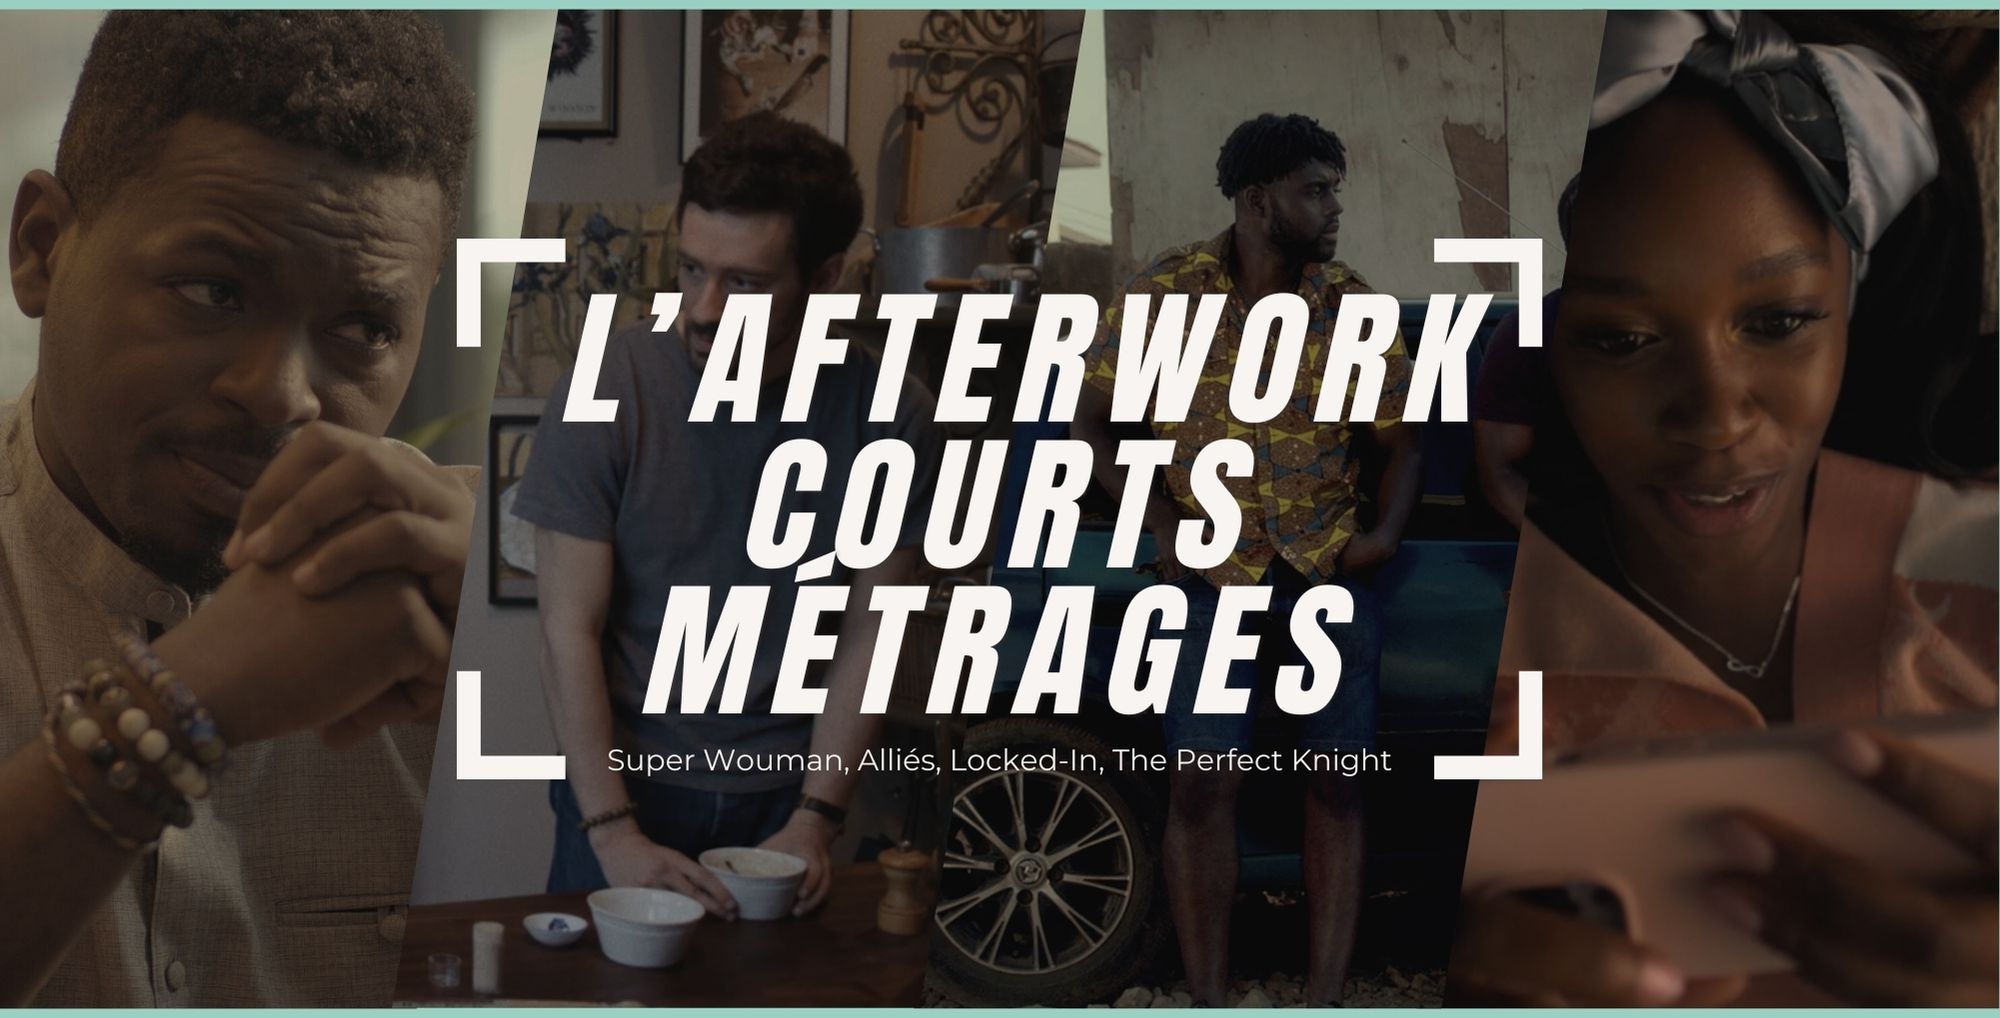 courts-metrages-afterwork